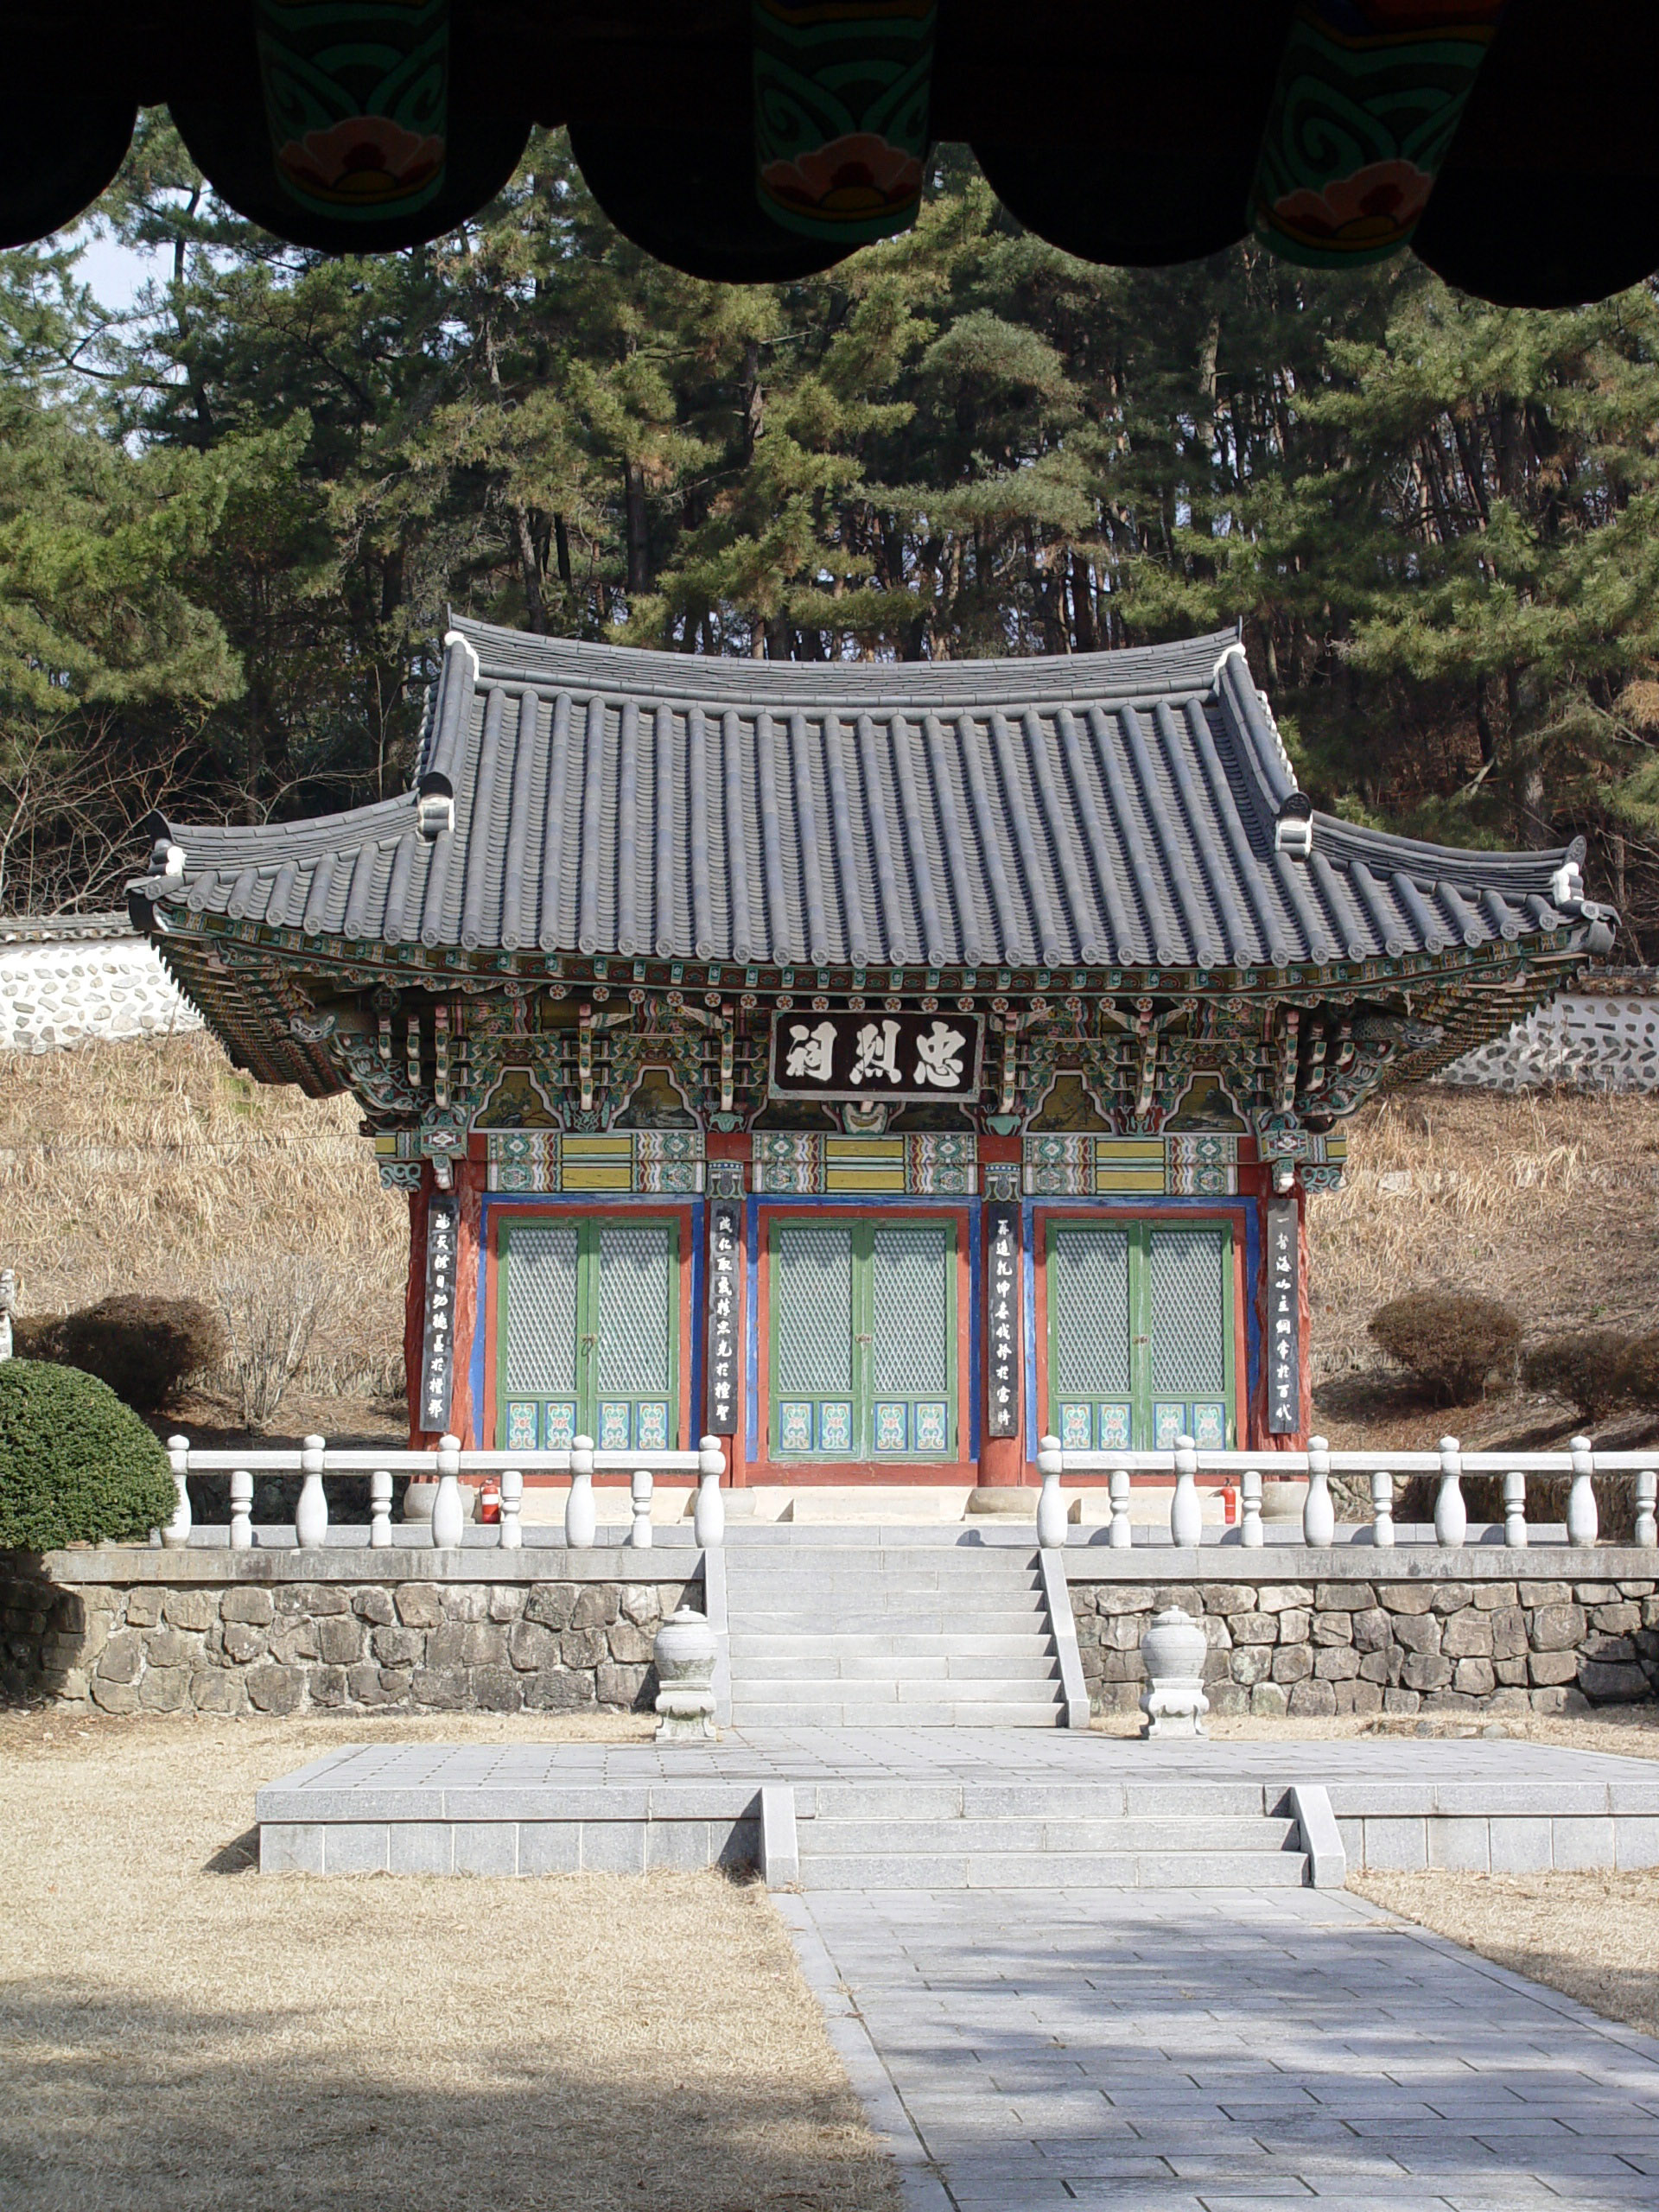 Chungryeolsa temple building in Jeongeup South Korea  